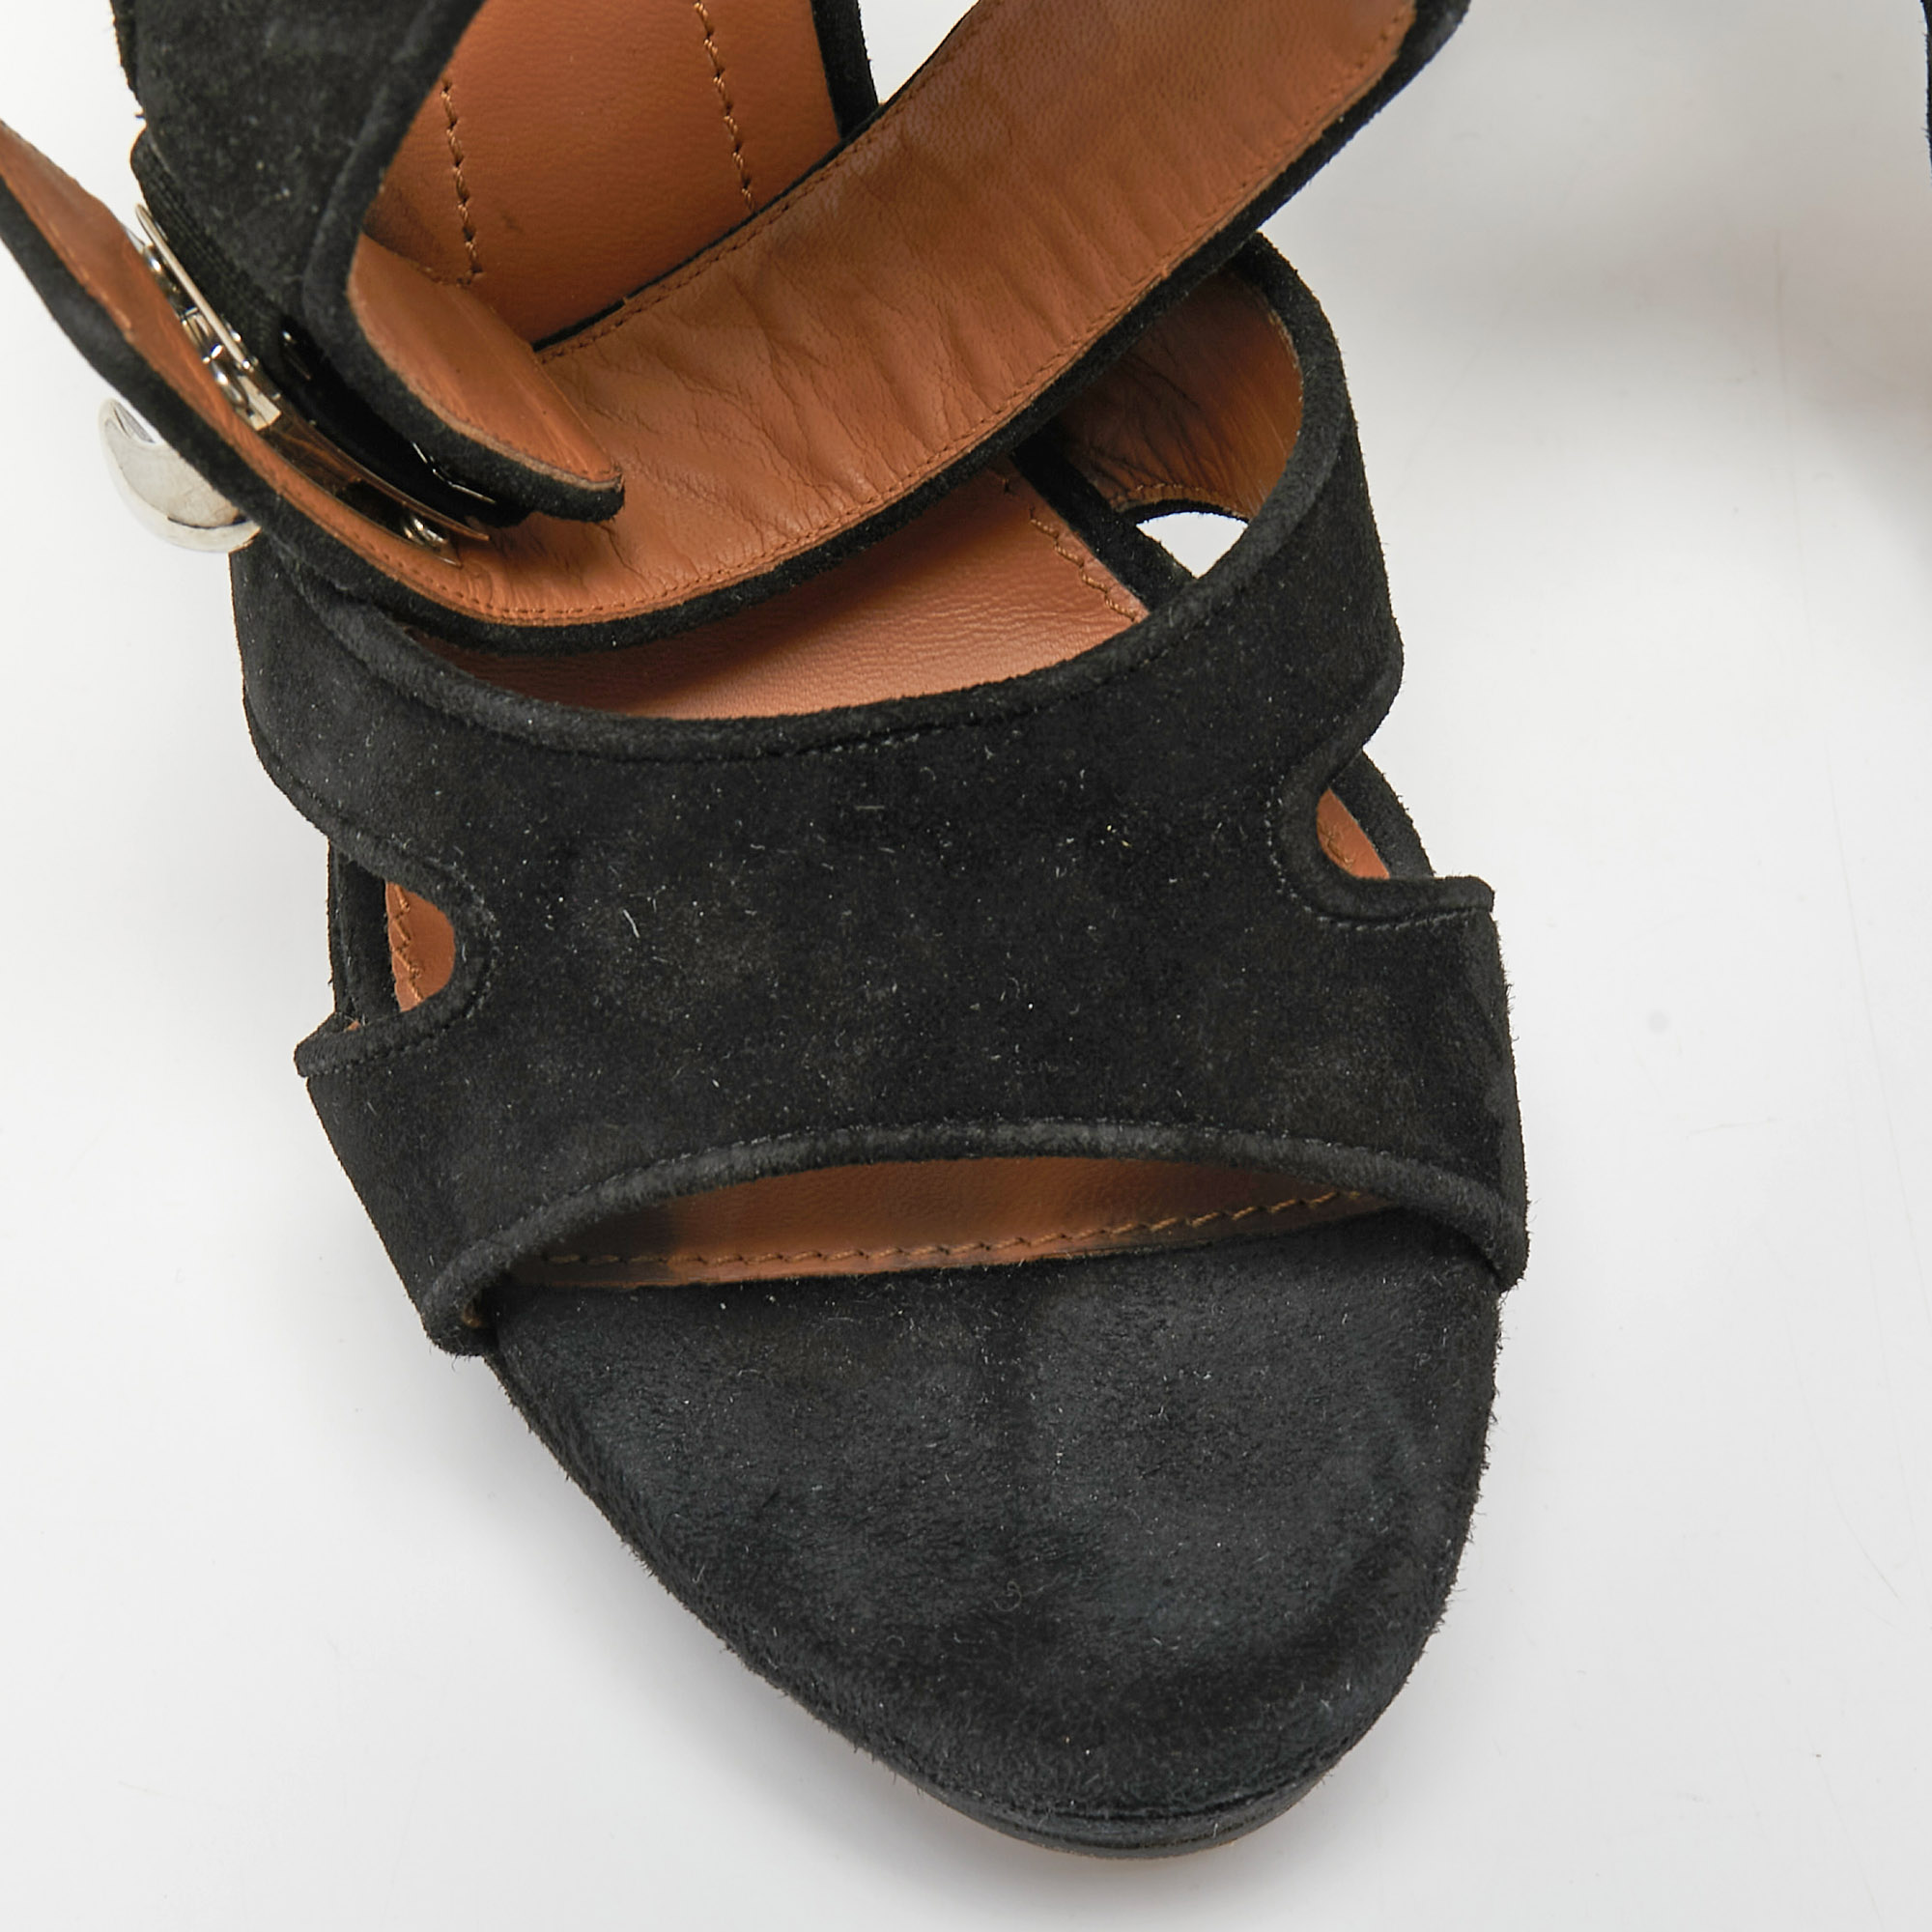 Givenchy Black Suede Shark Lock Ankle Strap Sandals Size 39